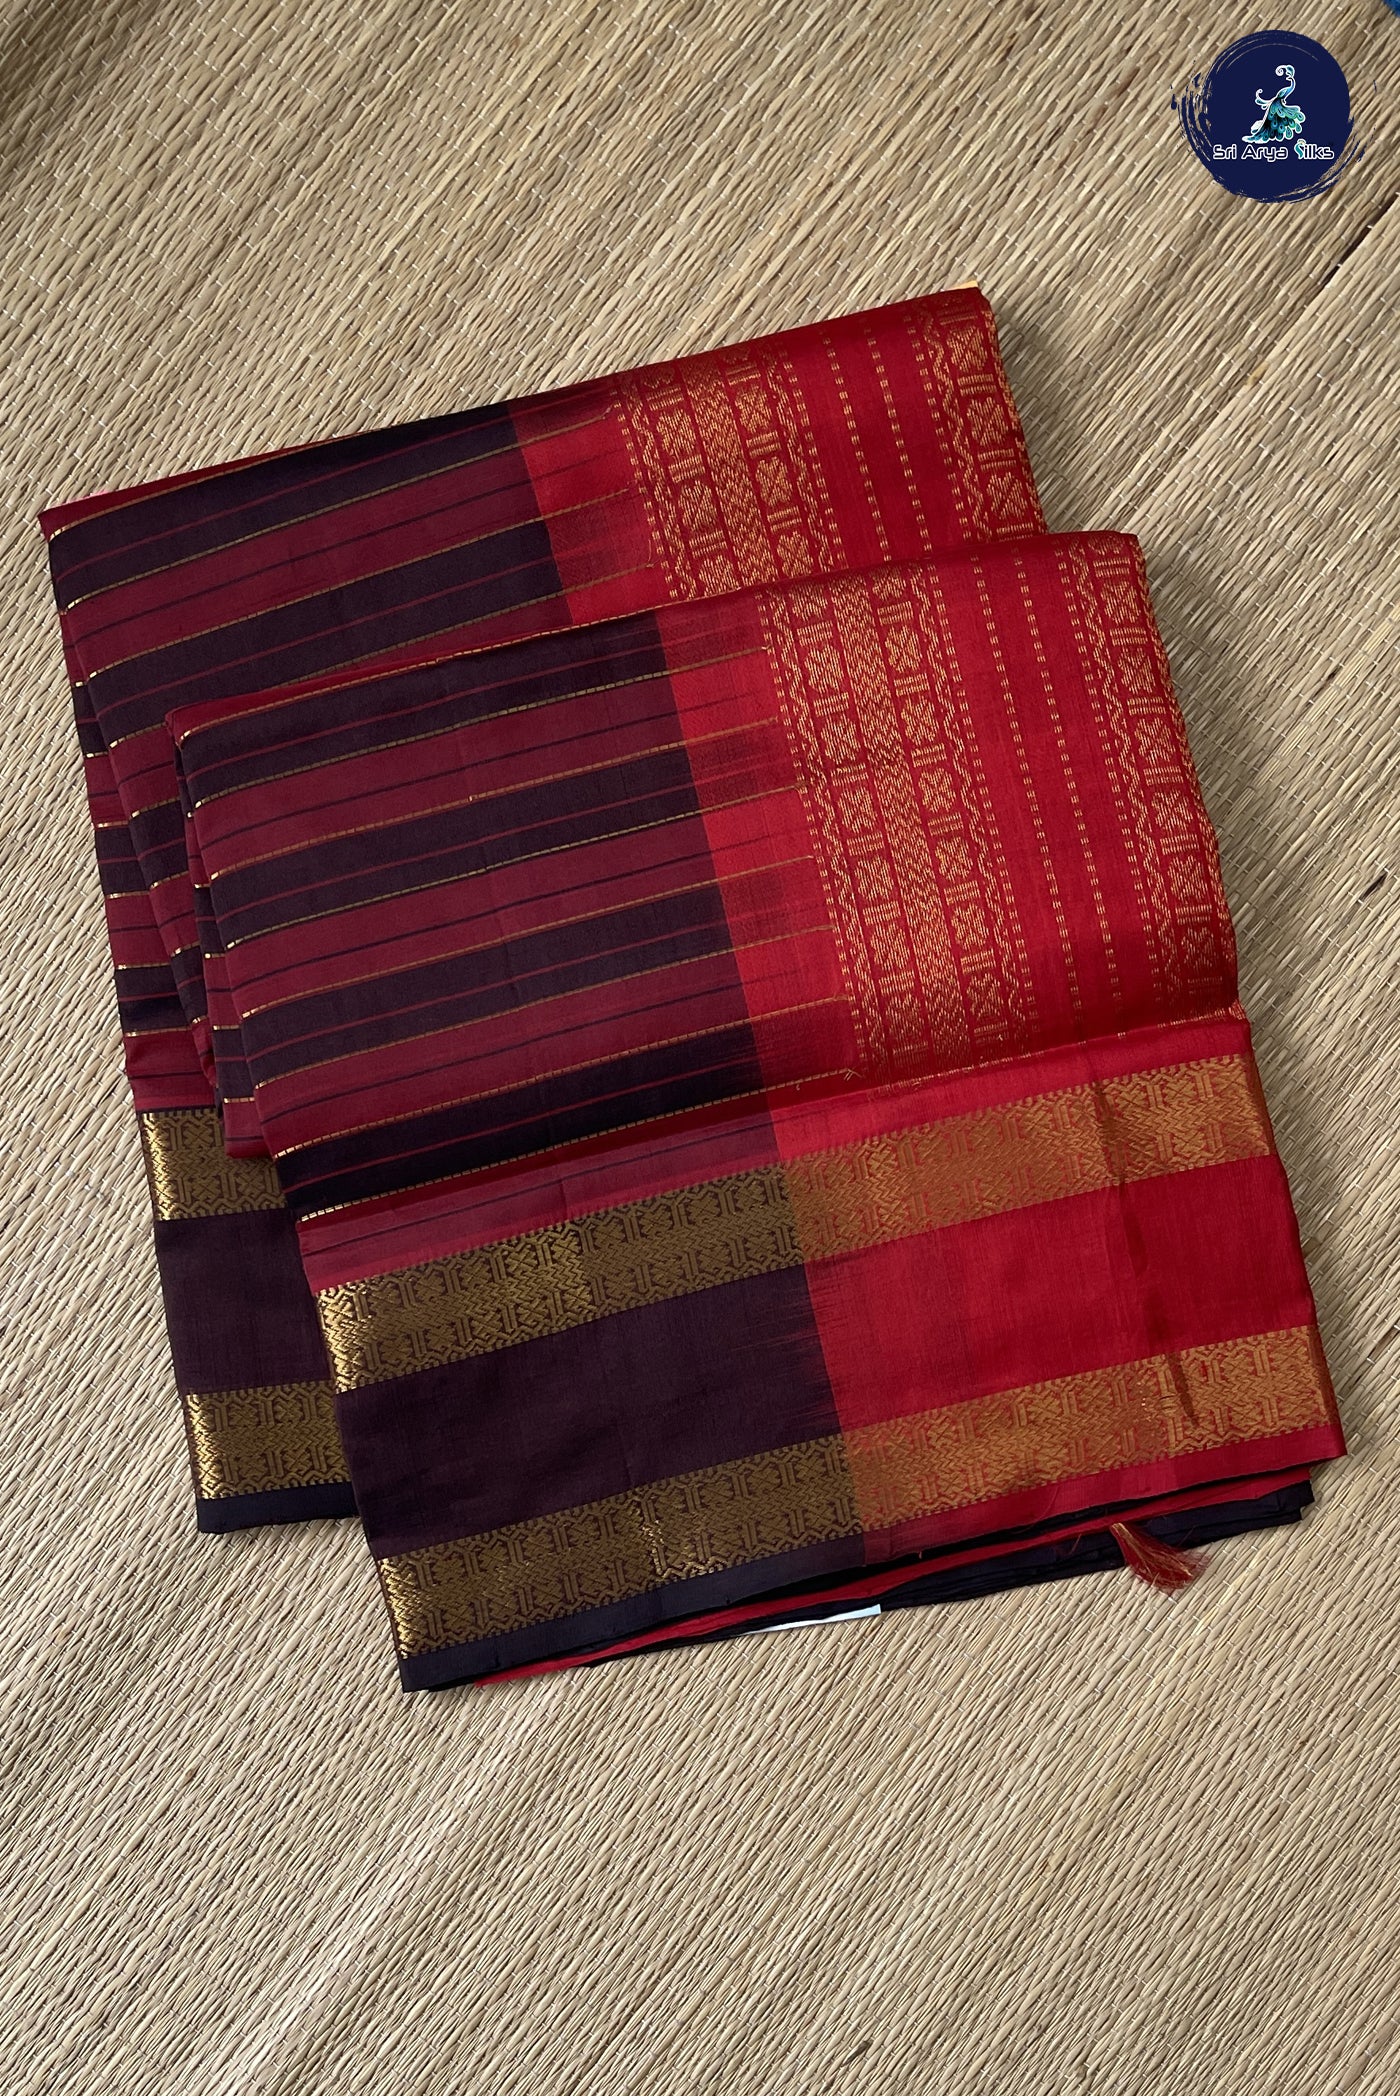 Multi Colour Simple Silk Cotton Saree With Stripes Pattern